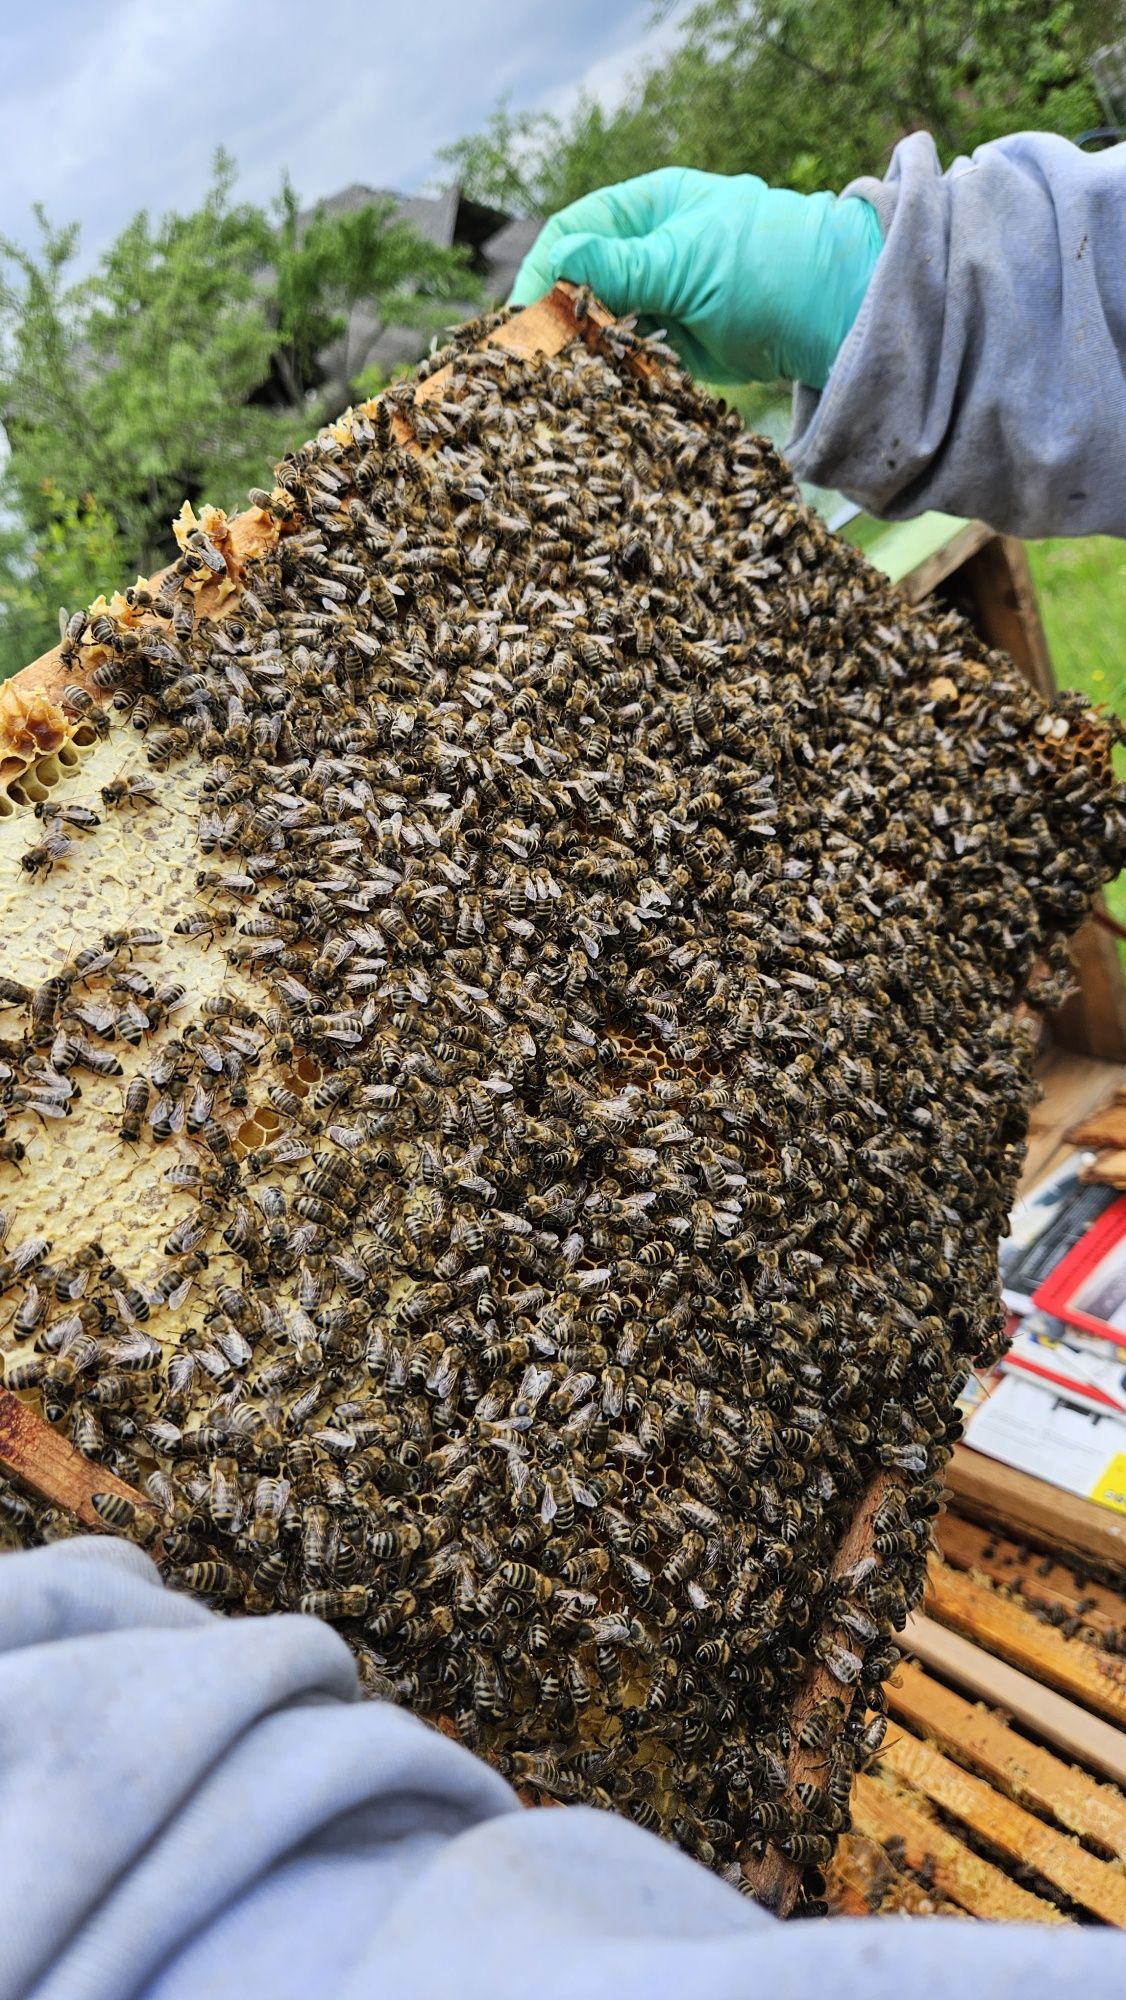 Vand familii de albine 450-500 negociabil